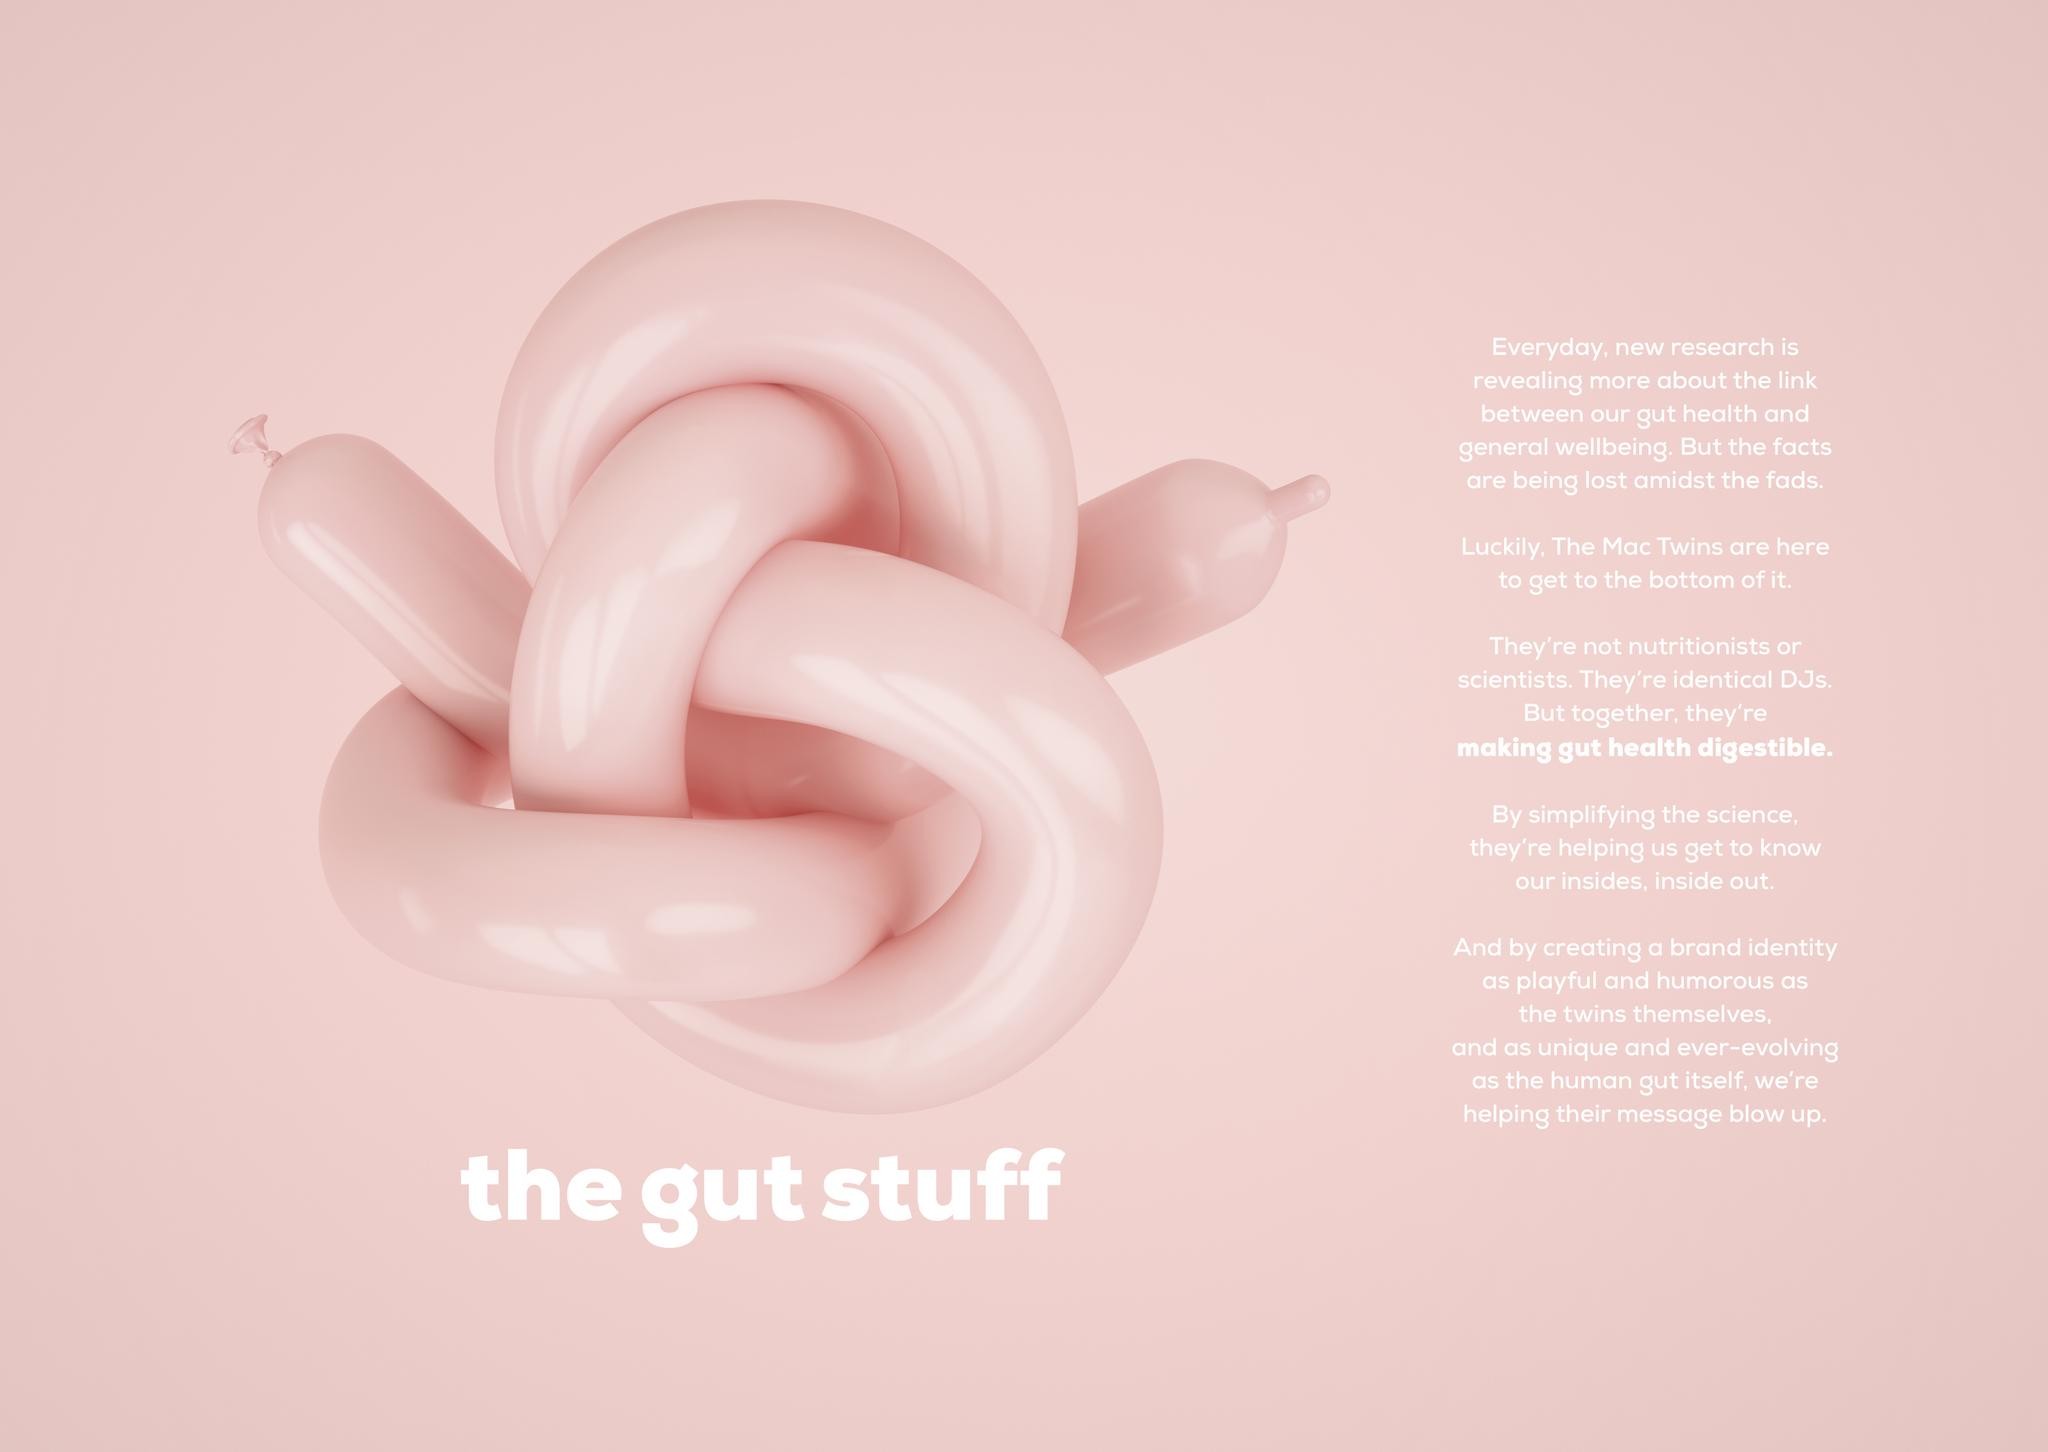 Making Gut Health Digestible